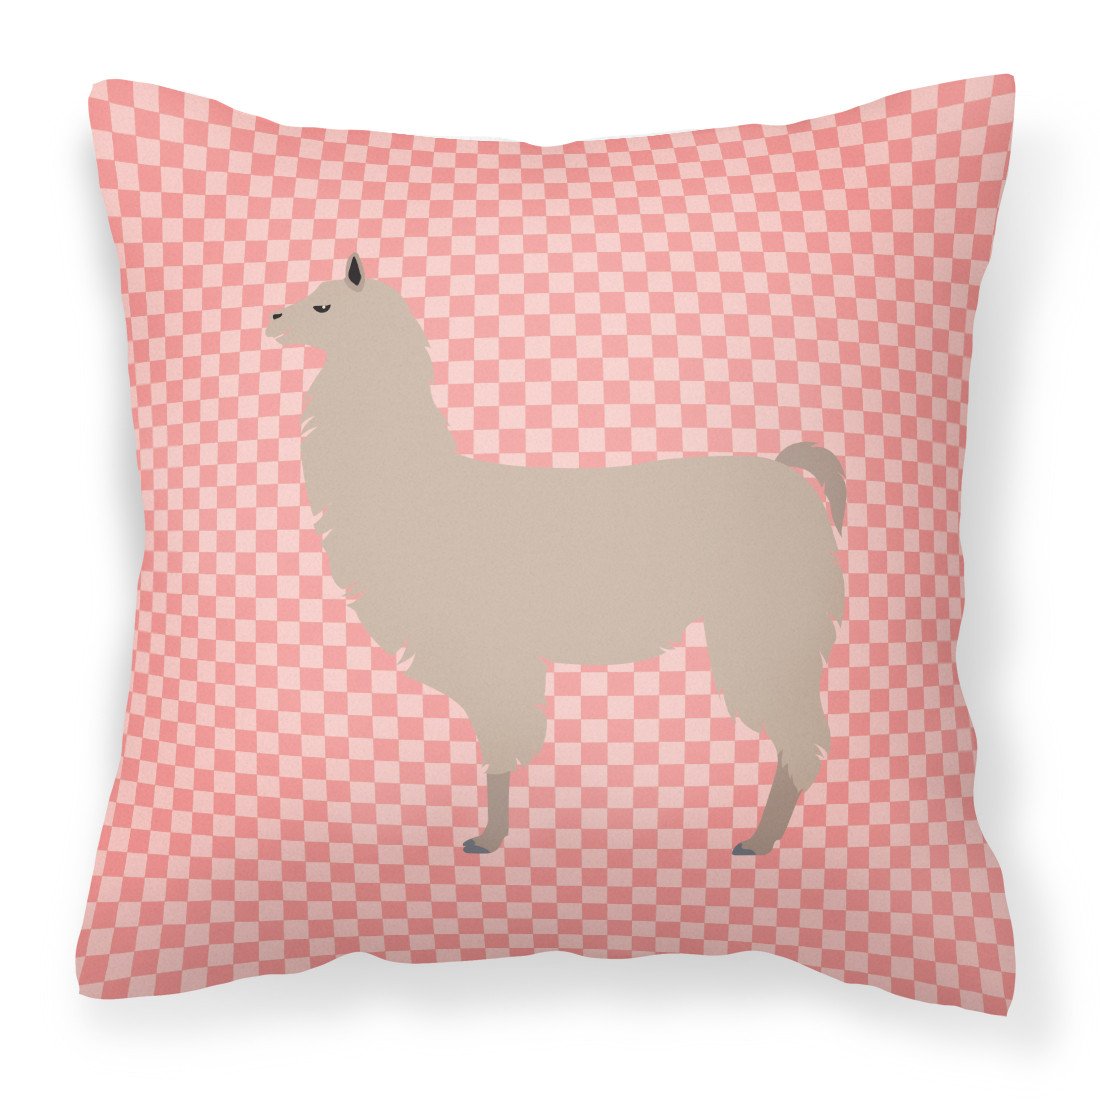 Llama Pink Check Fabric Decorative Pillow BB7916PW1818 by Caroline's Treasures